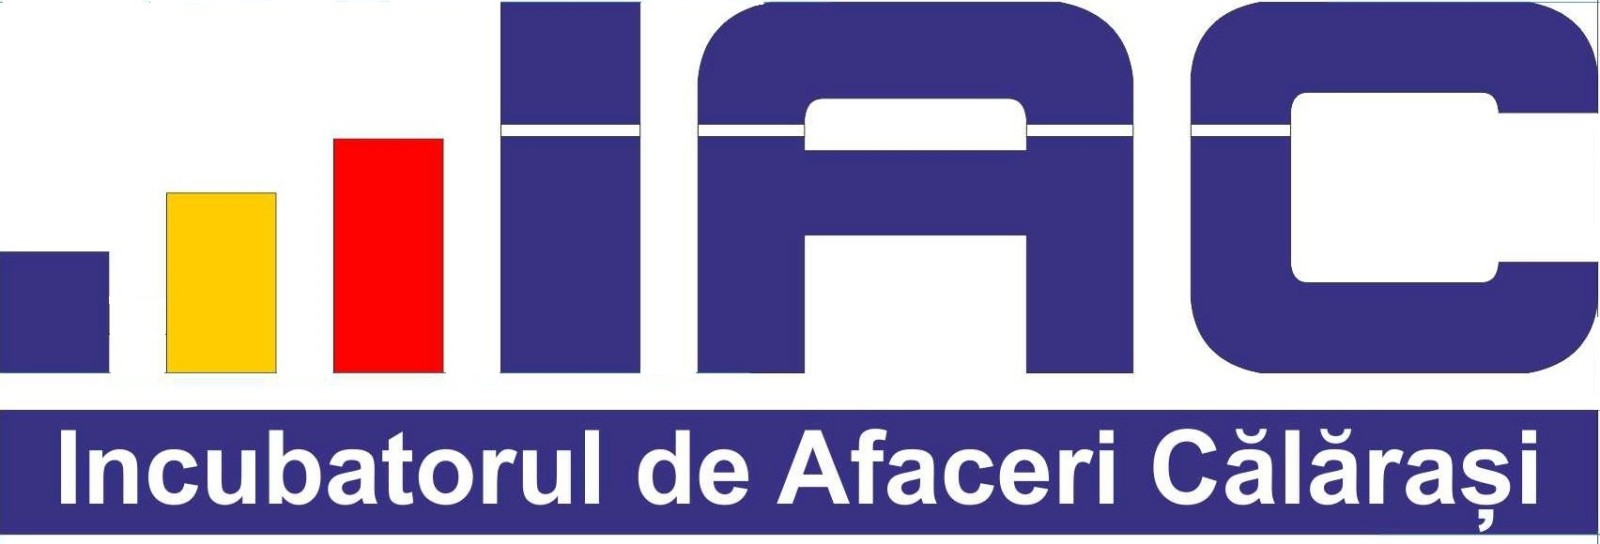 iac-logo